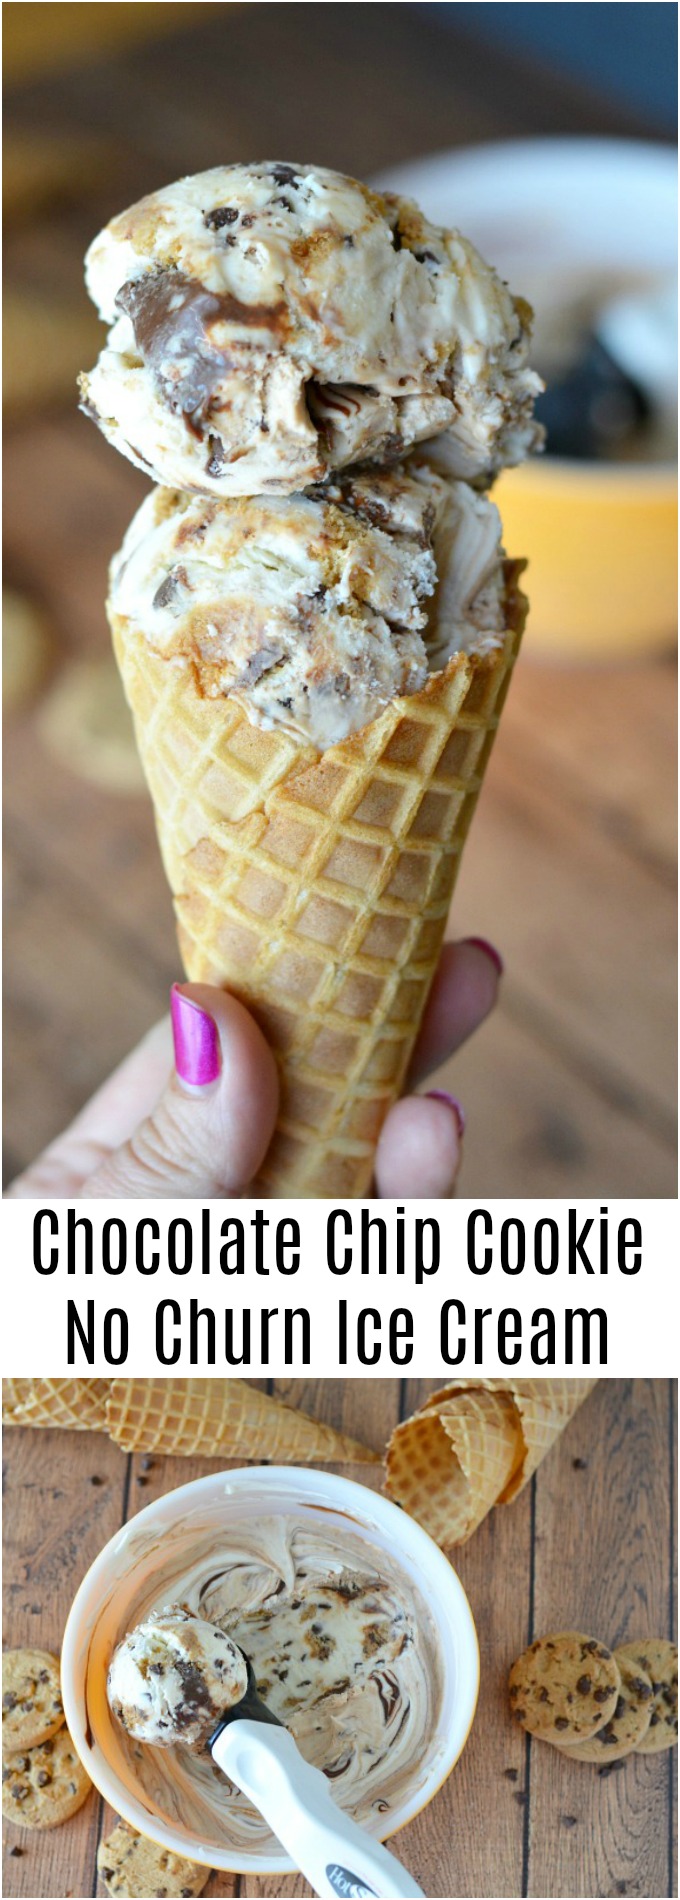 Chocolate Chip Cookie No Churn Ice Cream Recipe